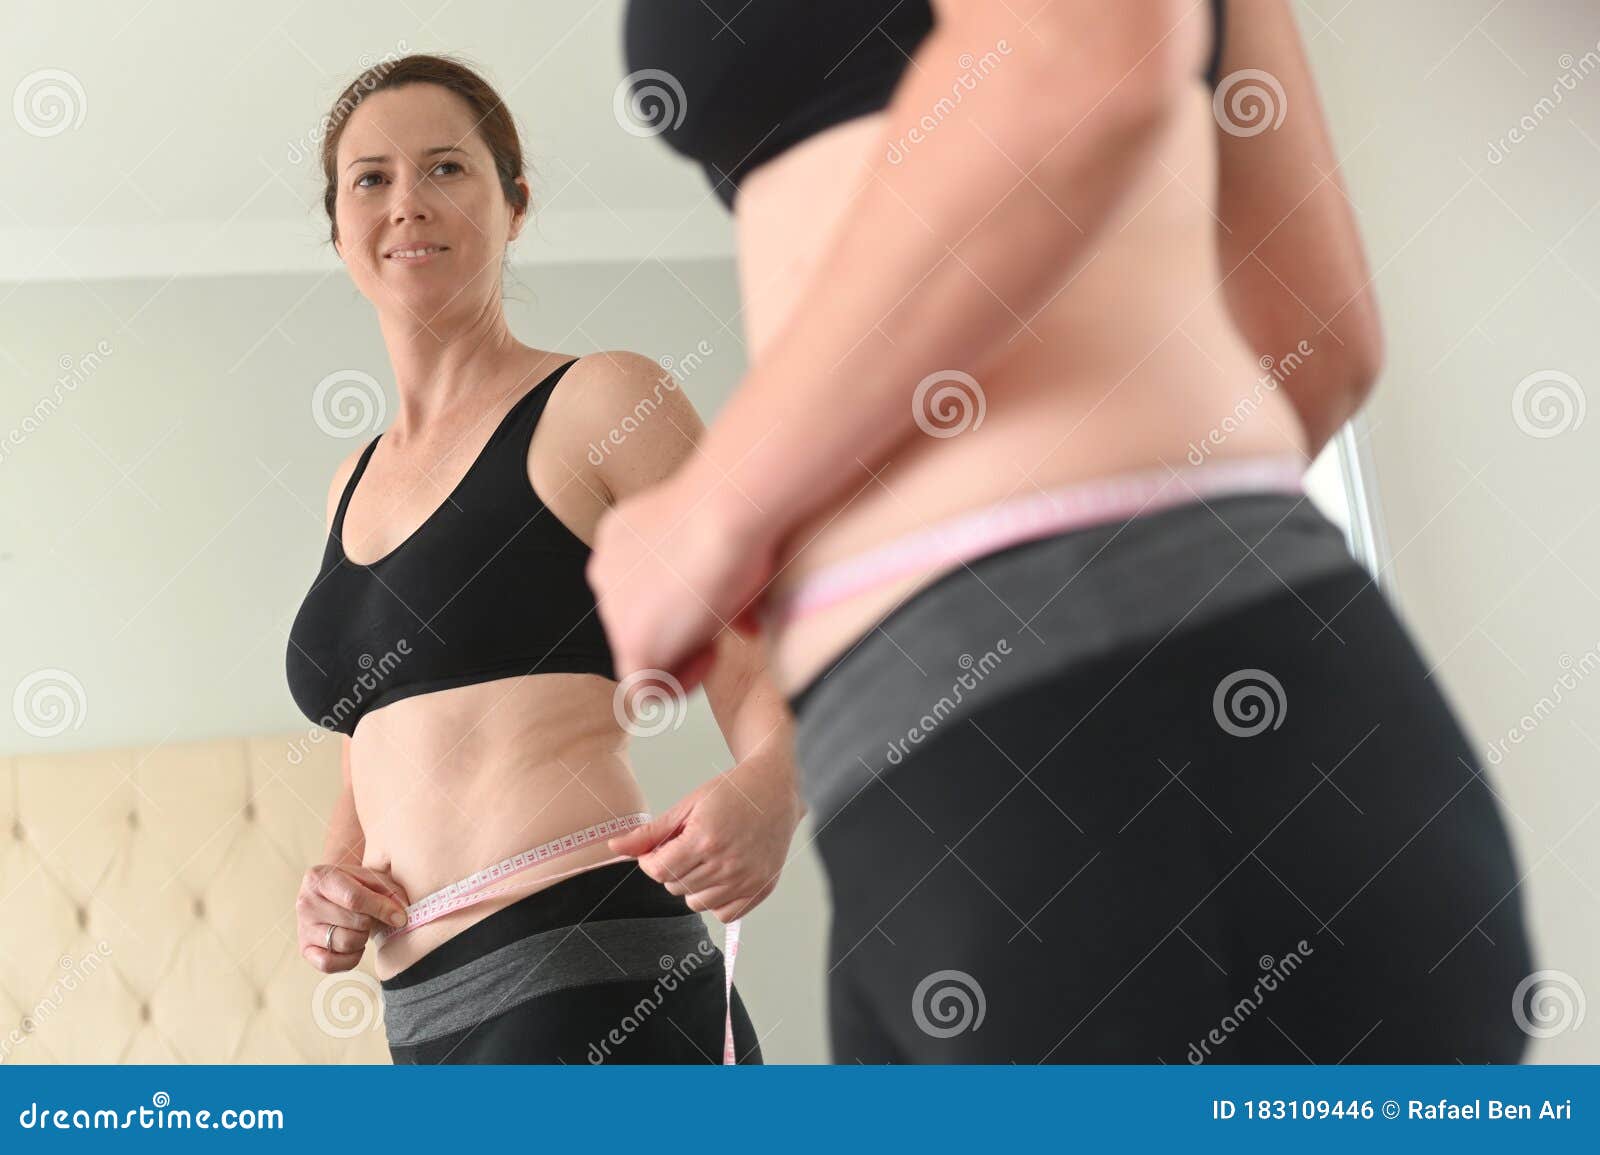 satisfy adult woman measuring waist circumference